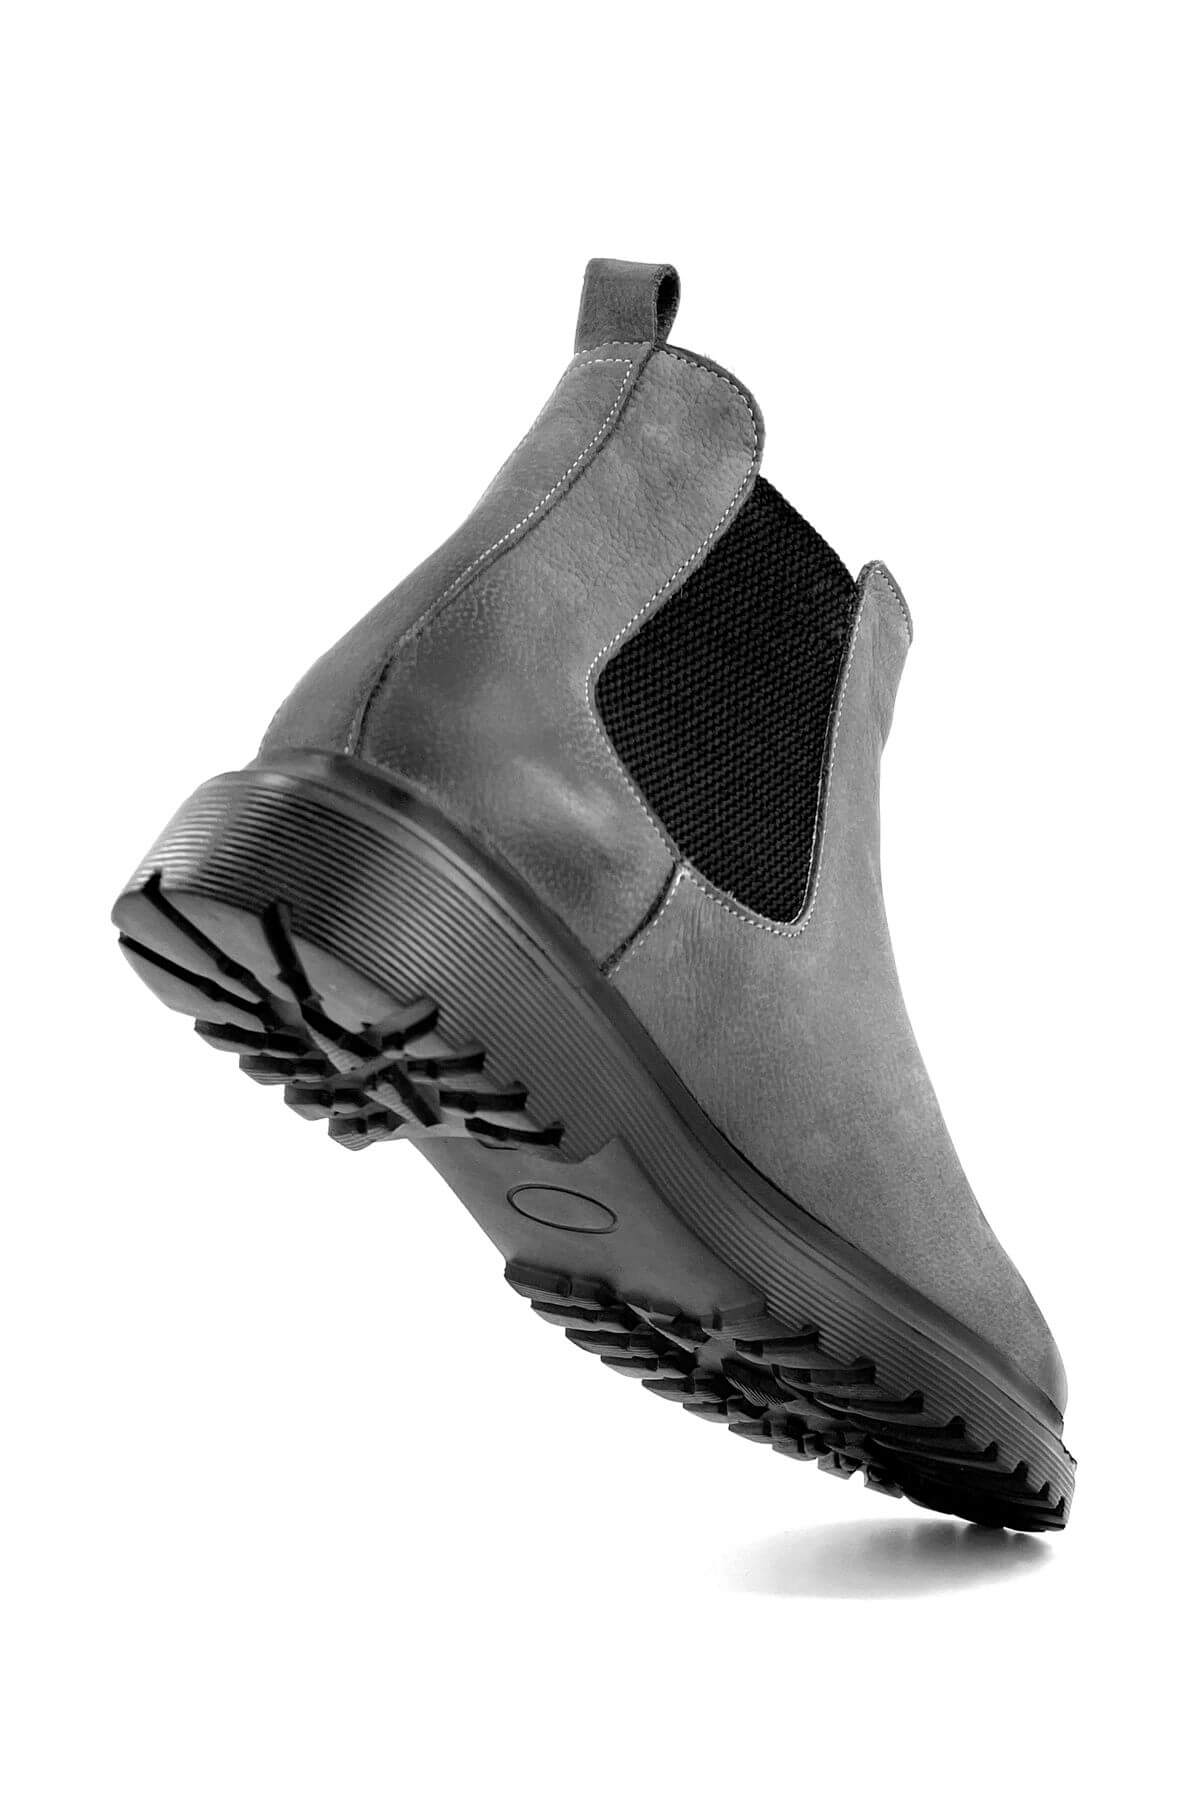 Nubuck Leather Grey Boots